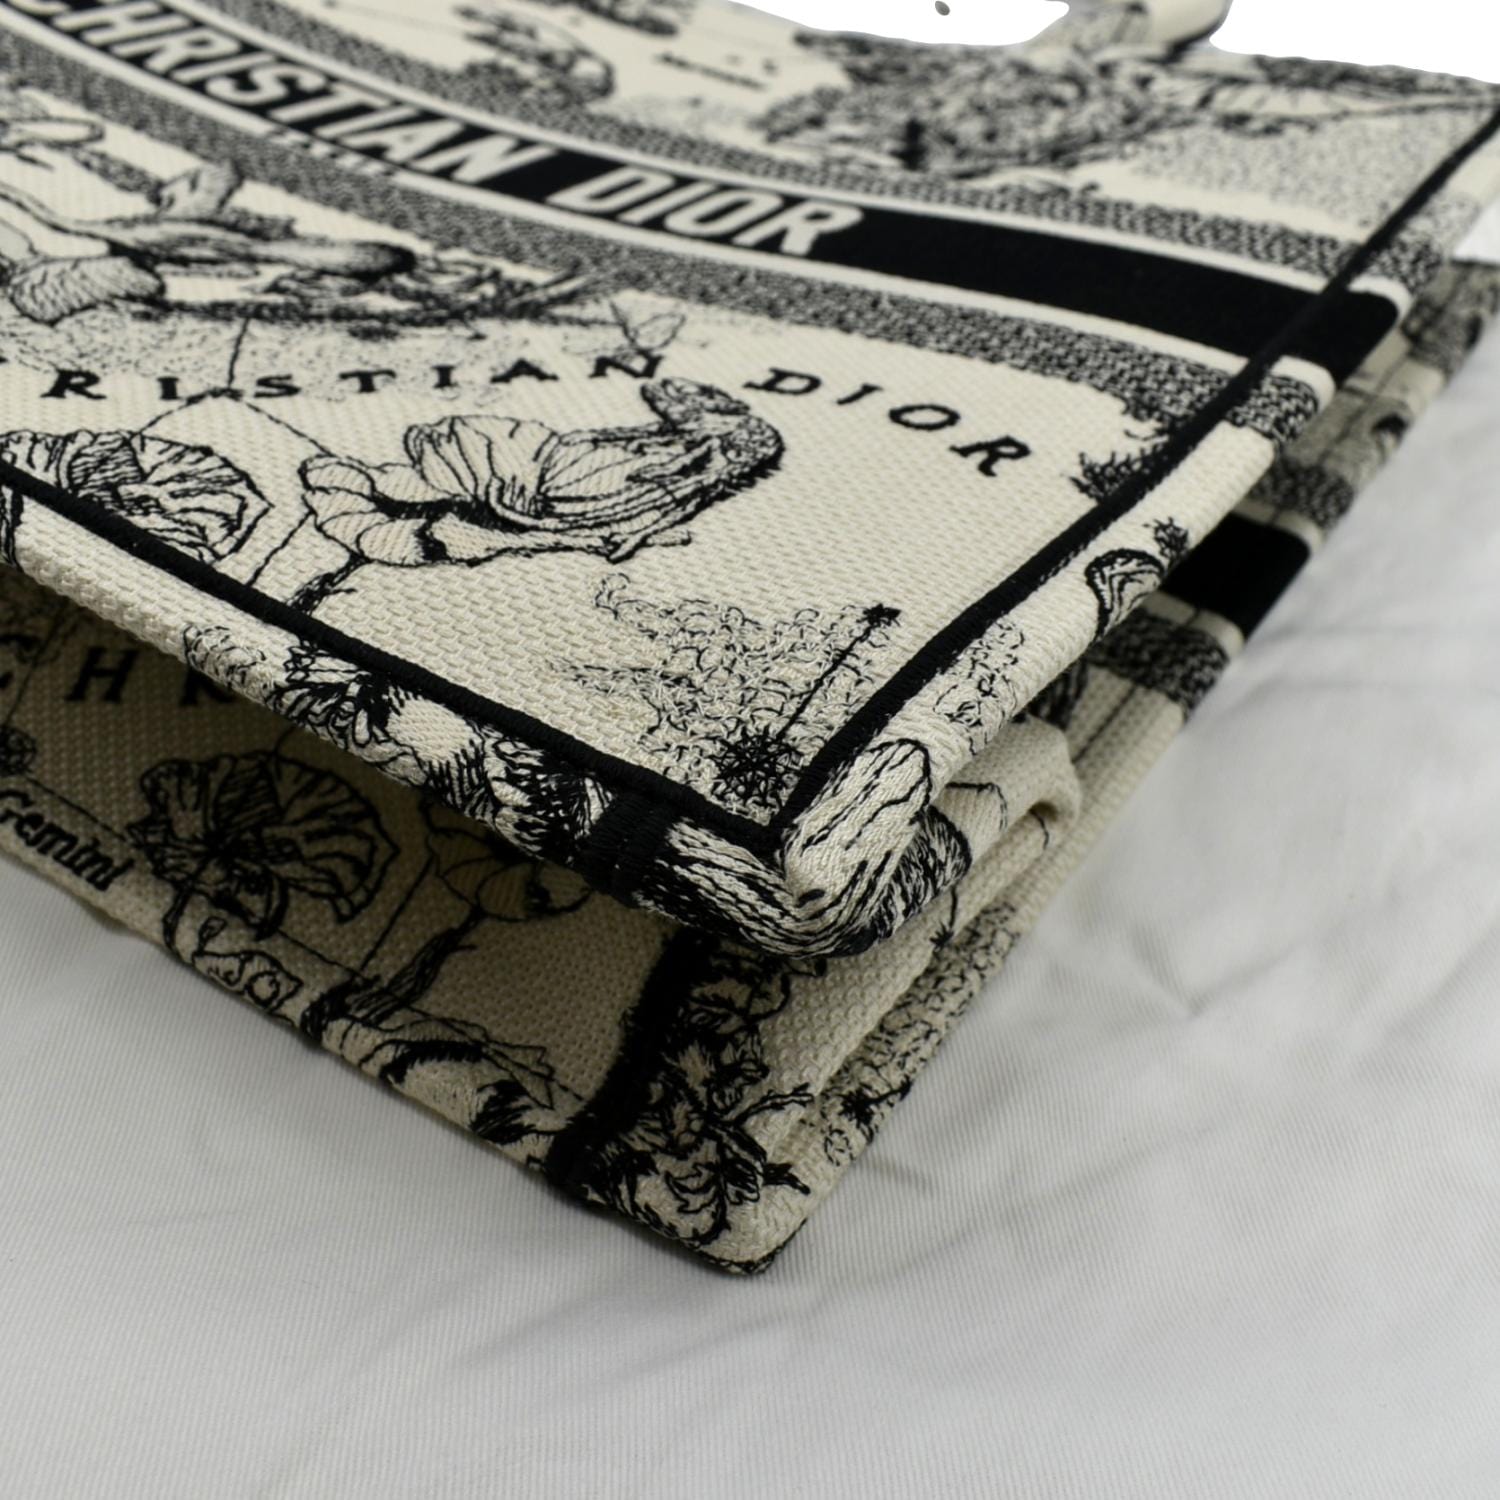 Dior Book Tote Large Bag Latte Multicolor Embroidery - Dior